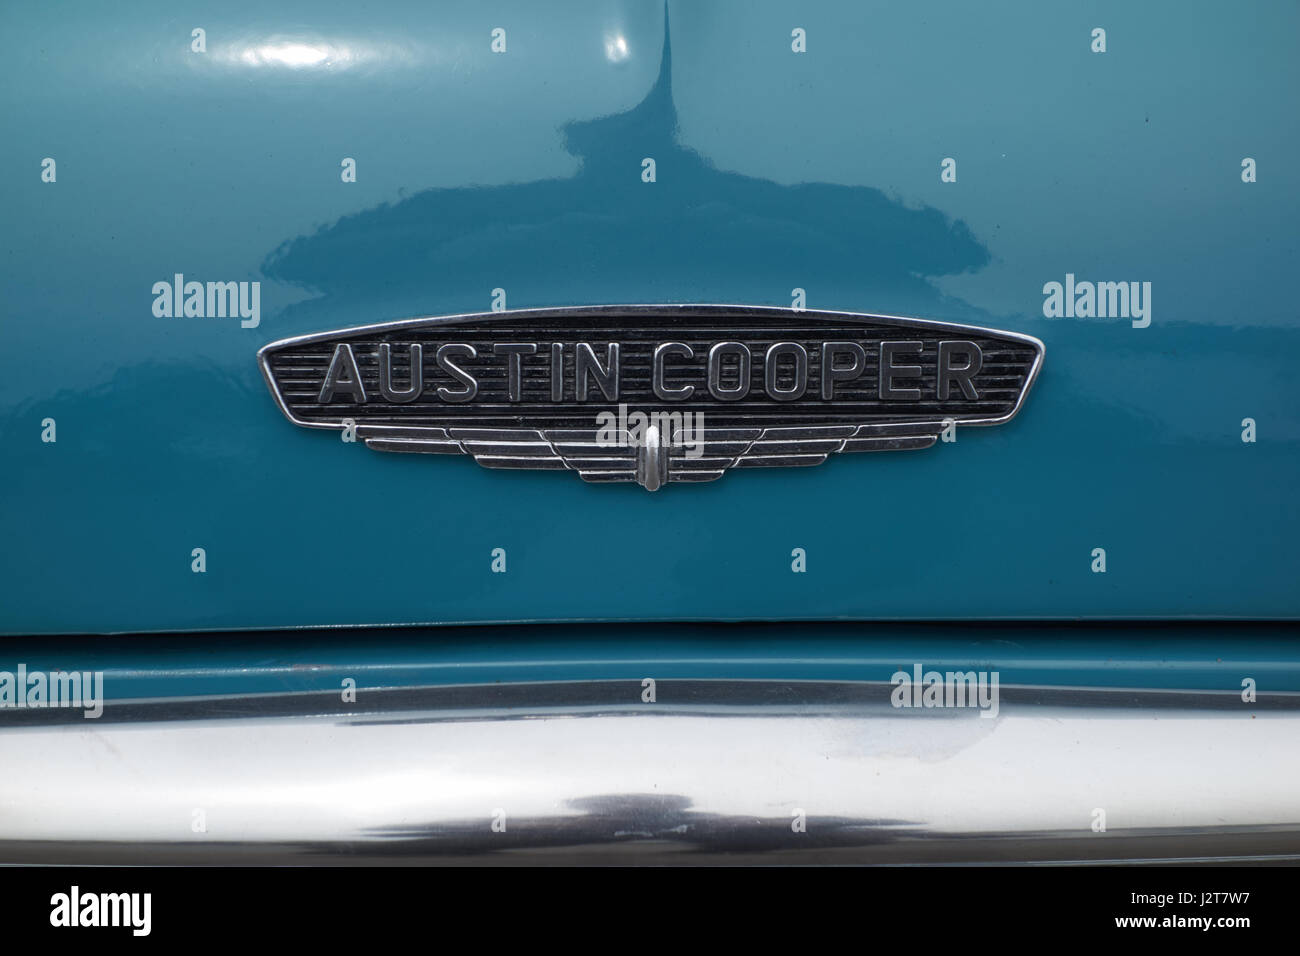 Austin Cooper emblem on bonnet of vintage blue mini. Stock Photo